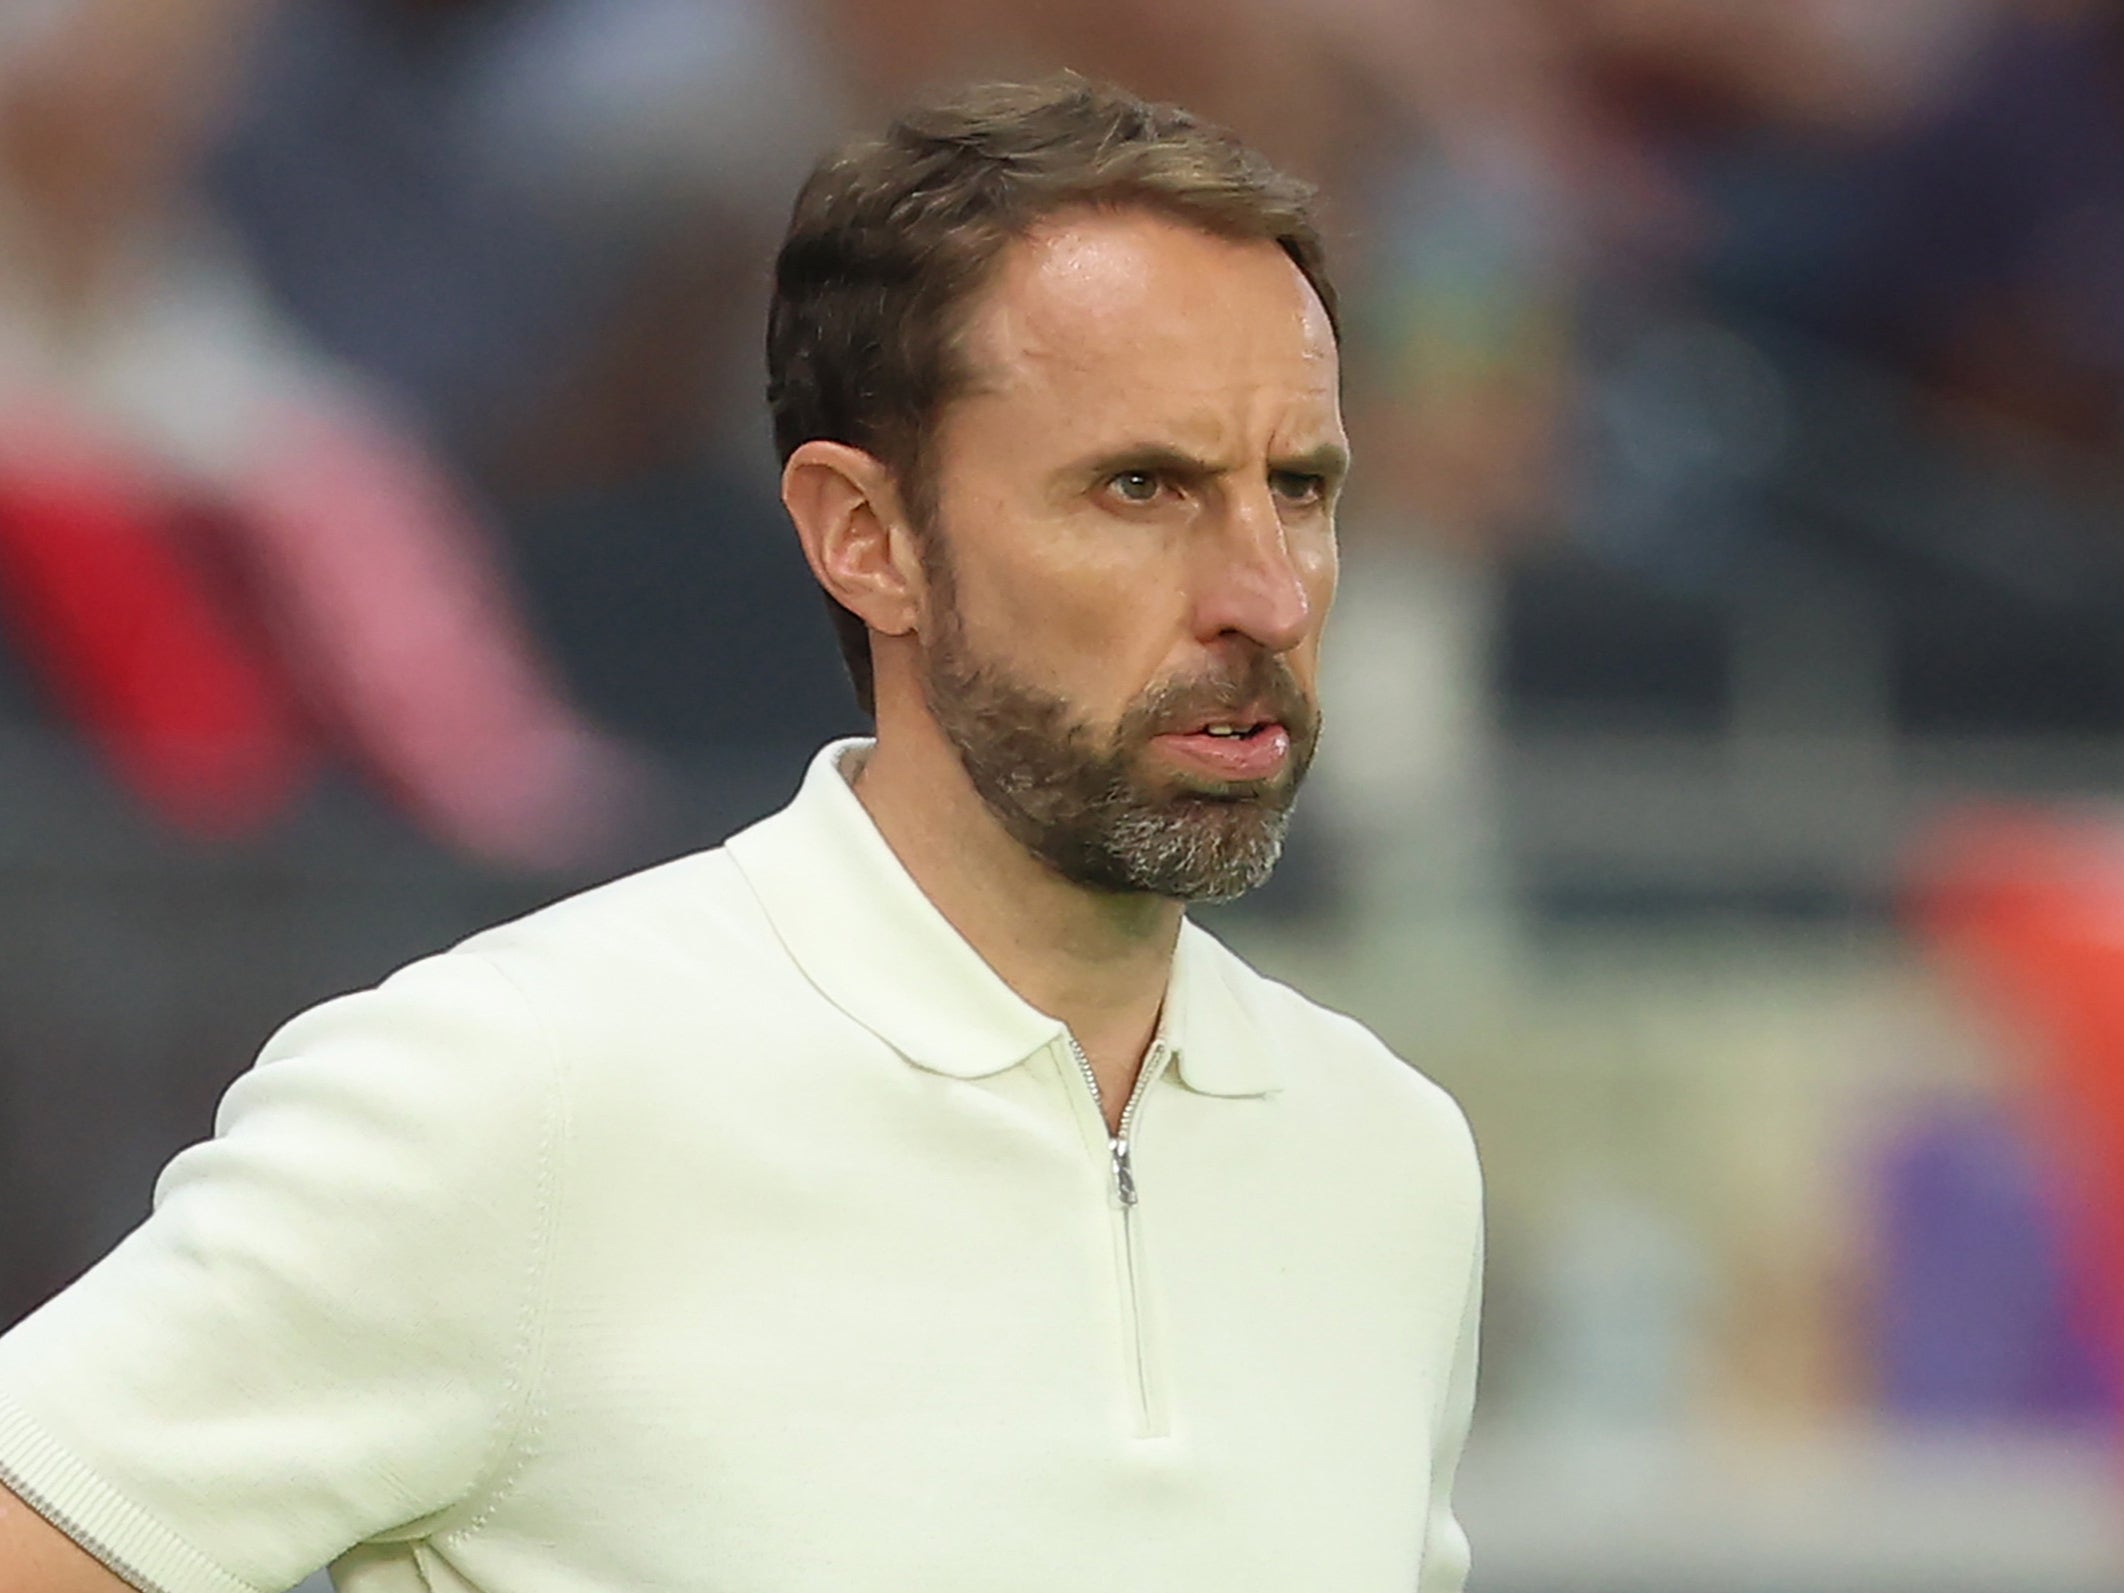 England head coach Gareth Southgate insists his team lack depth in midfield